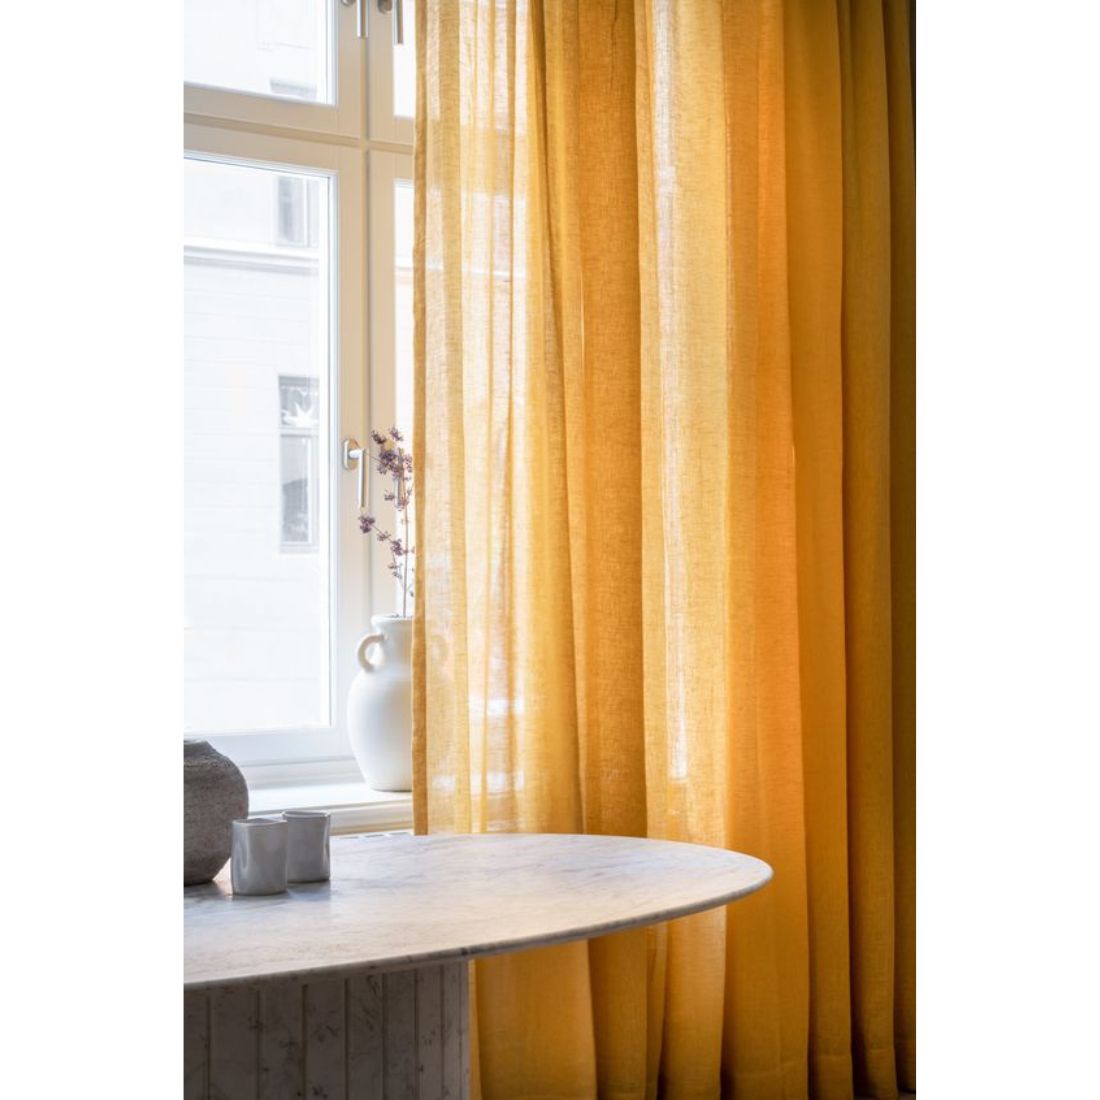 Mustard Linen Curtains